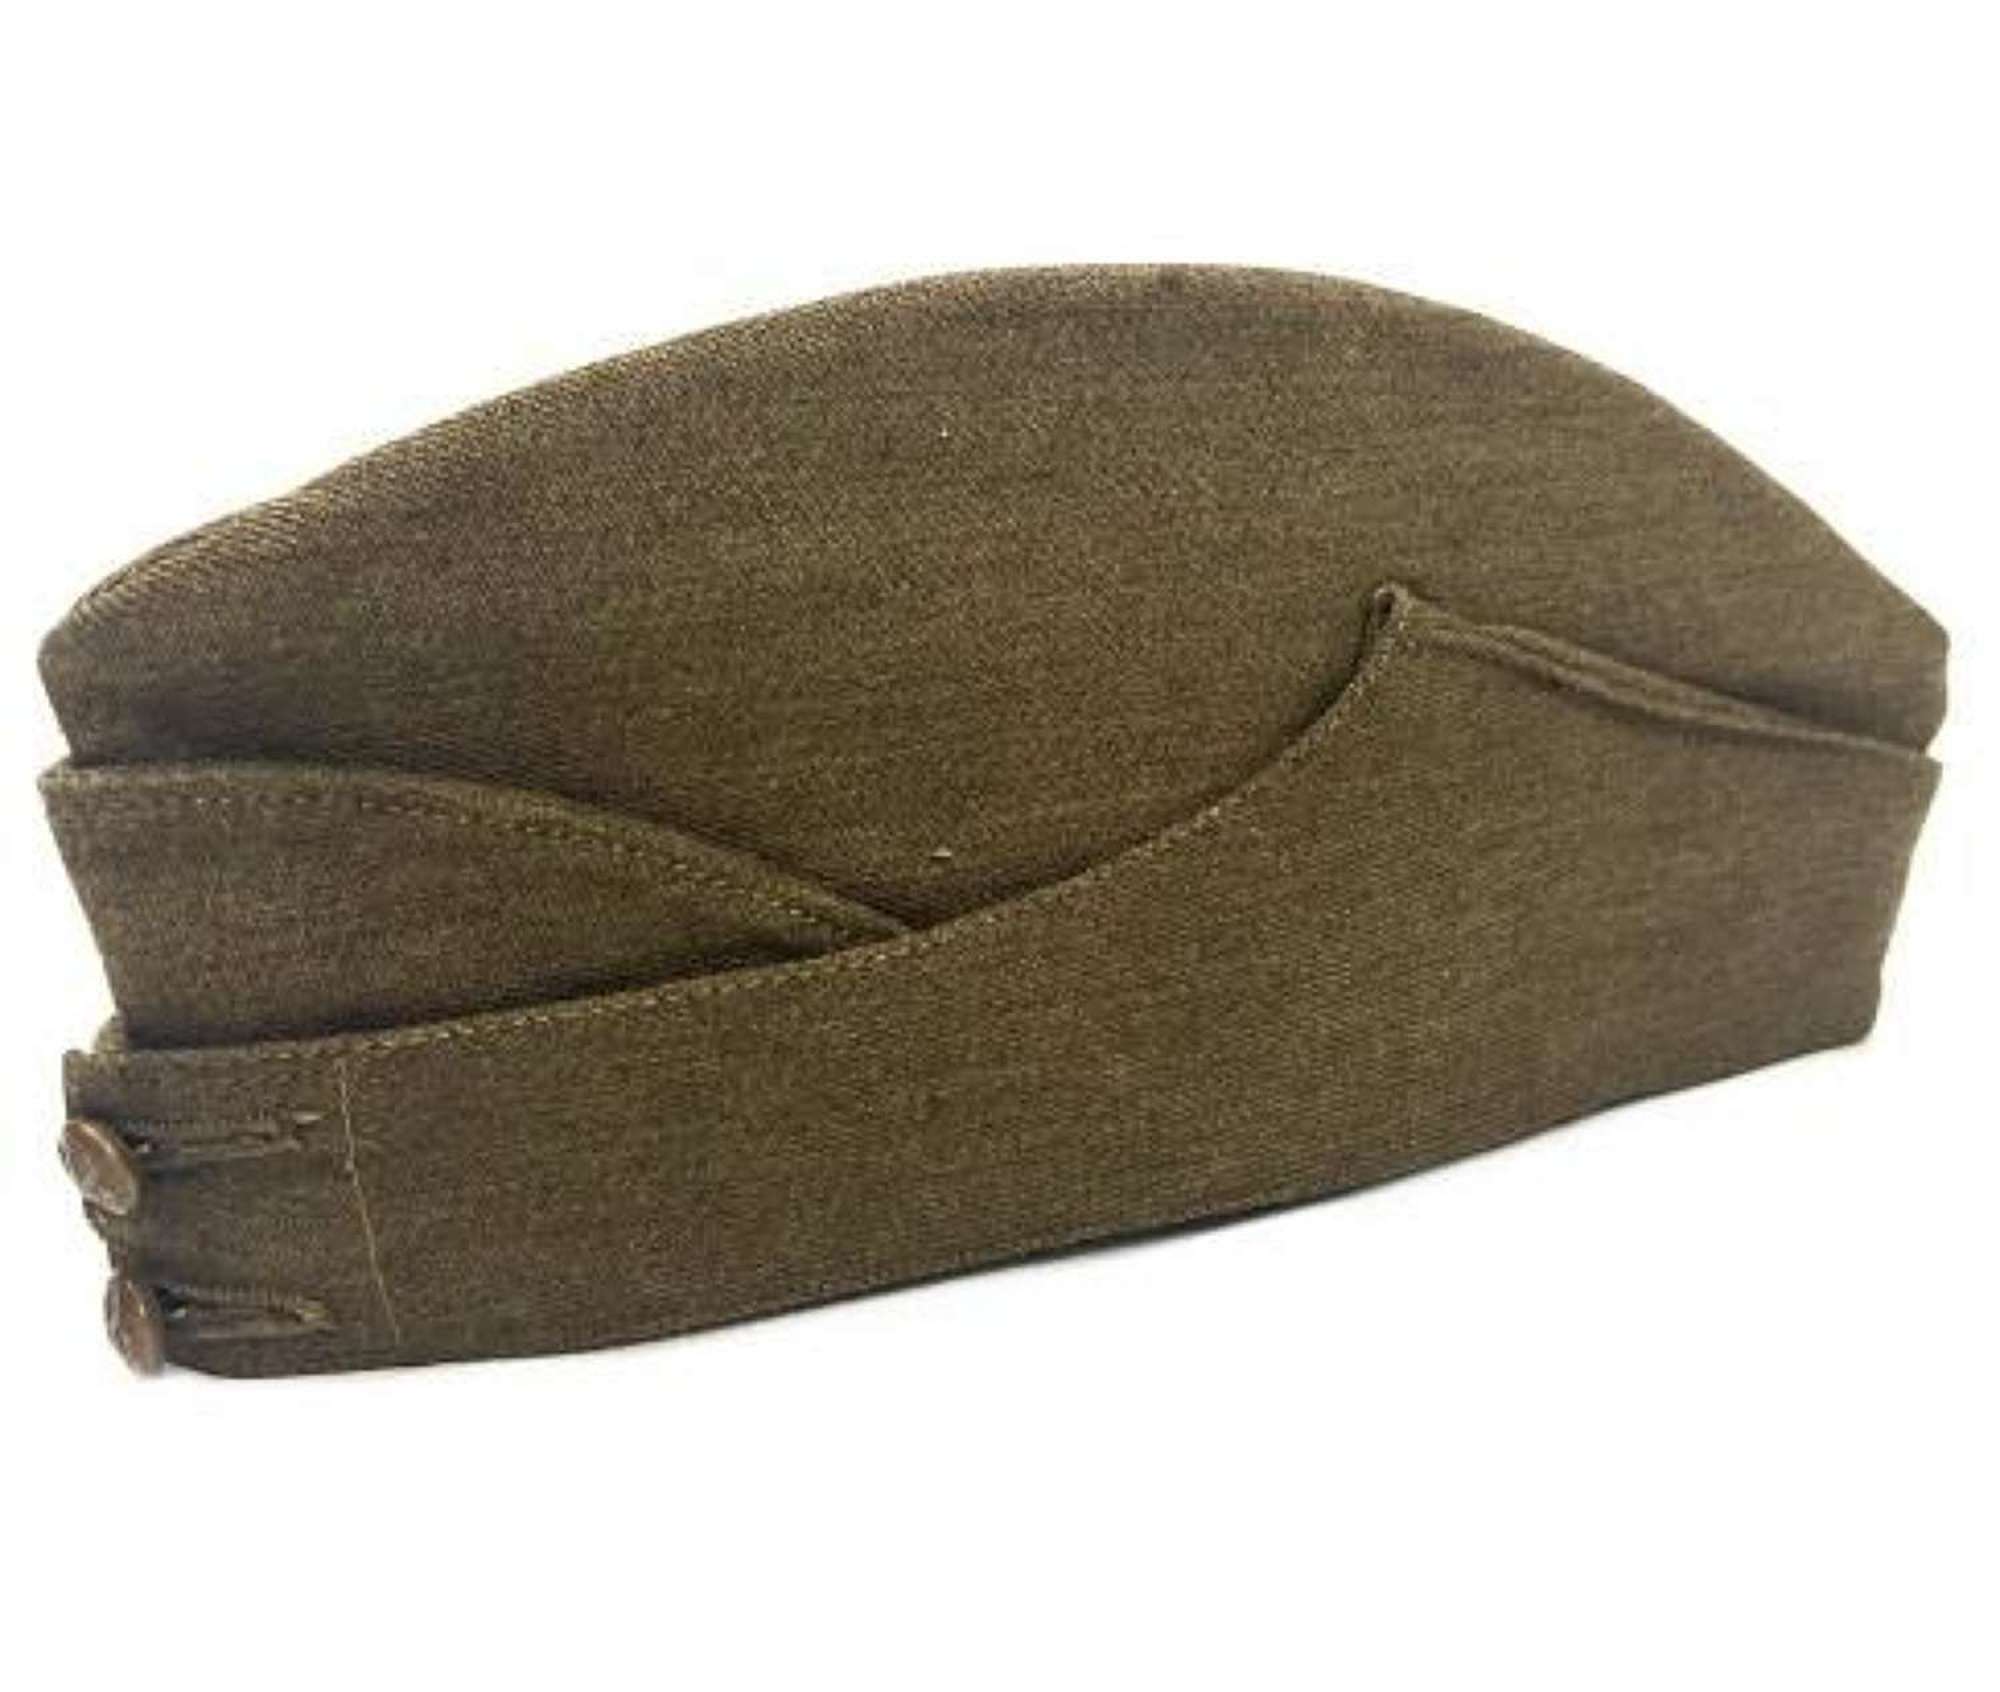 Original 1940 Dated British Army Field Service Cap - Size 7